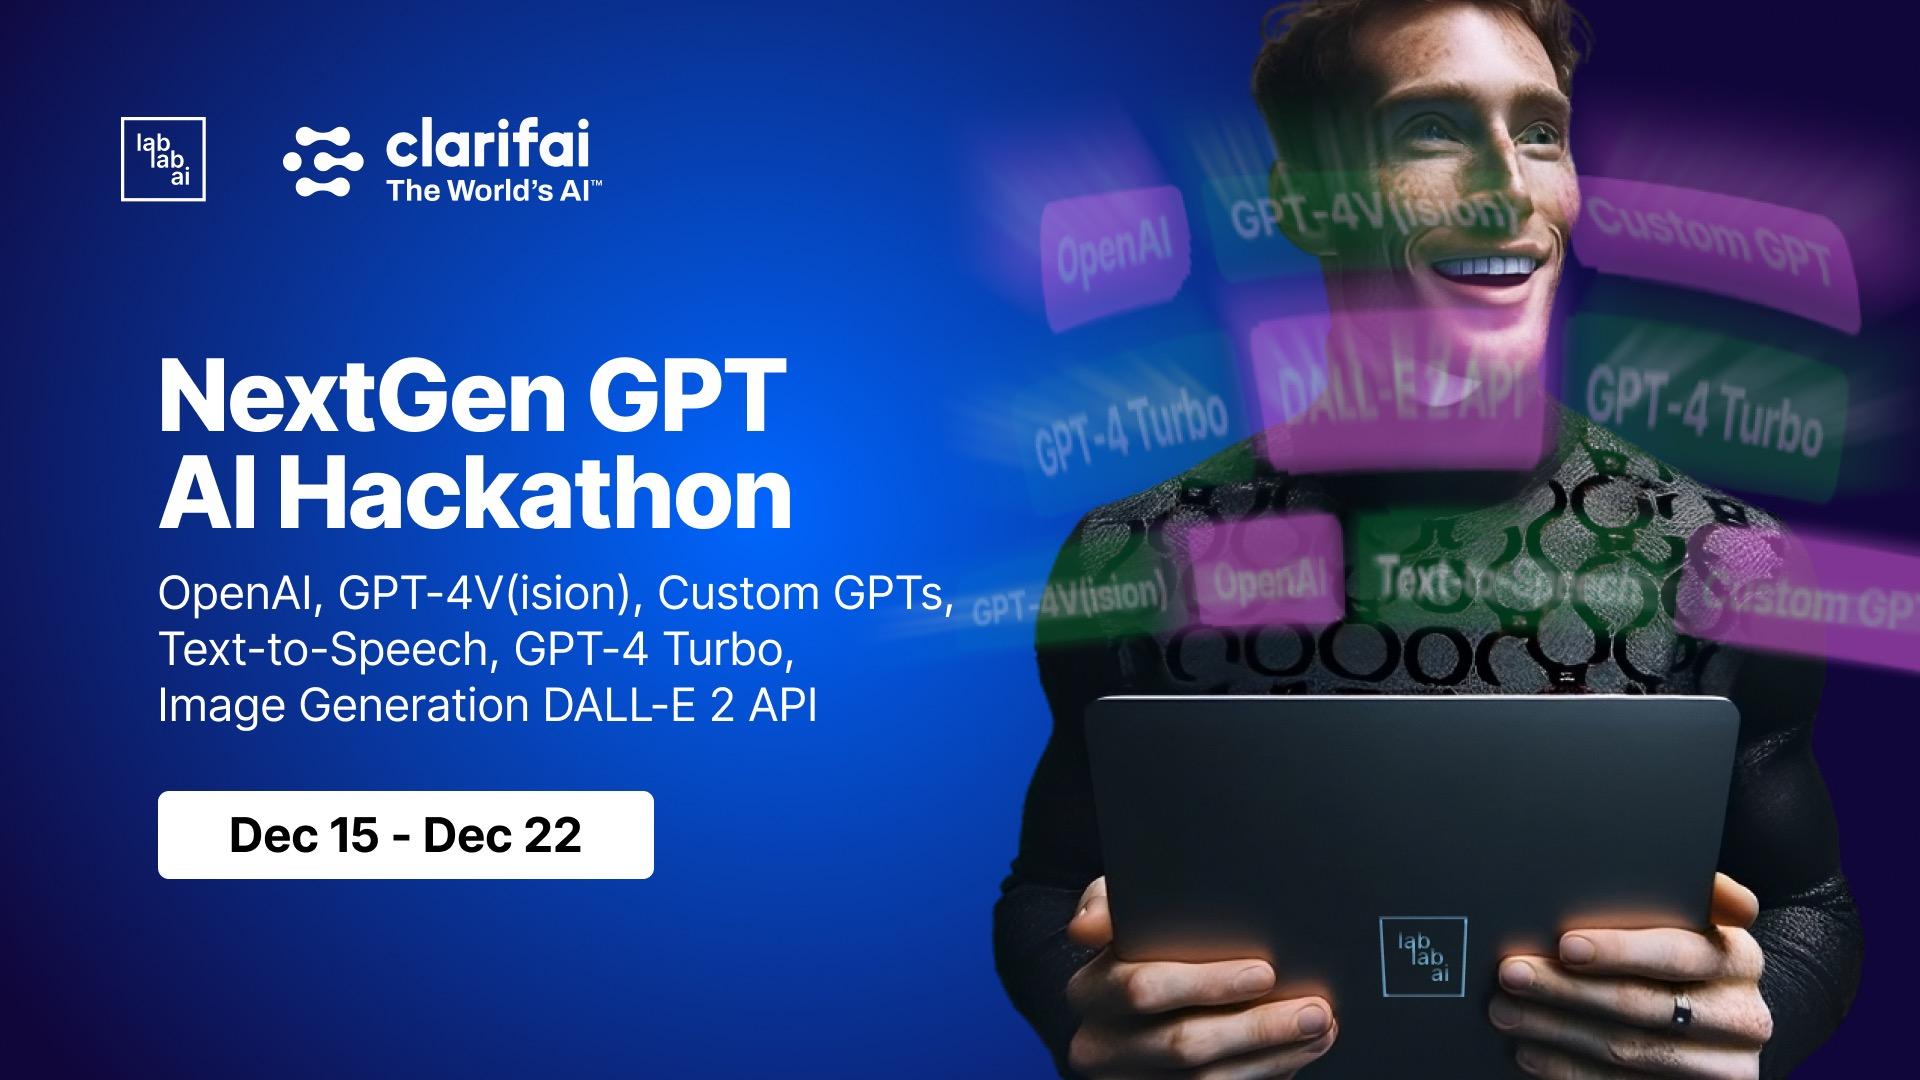 NextGen GPT AI Hackathon